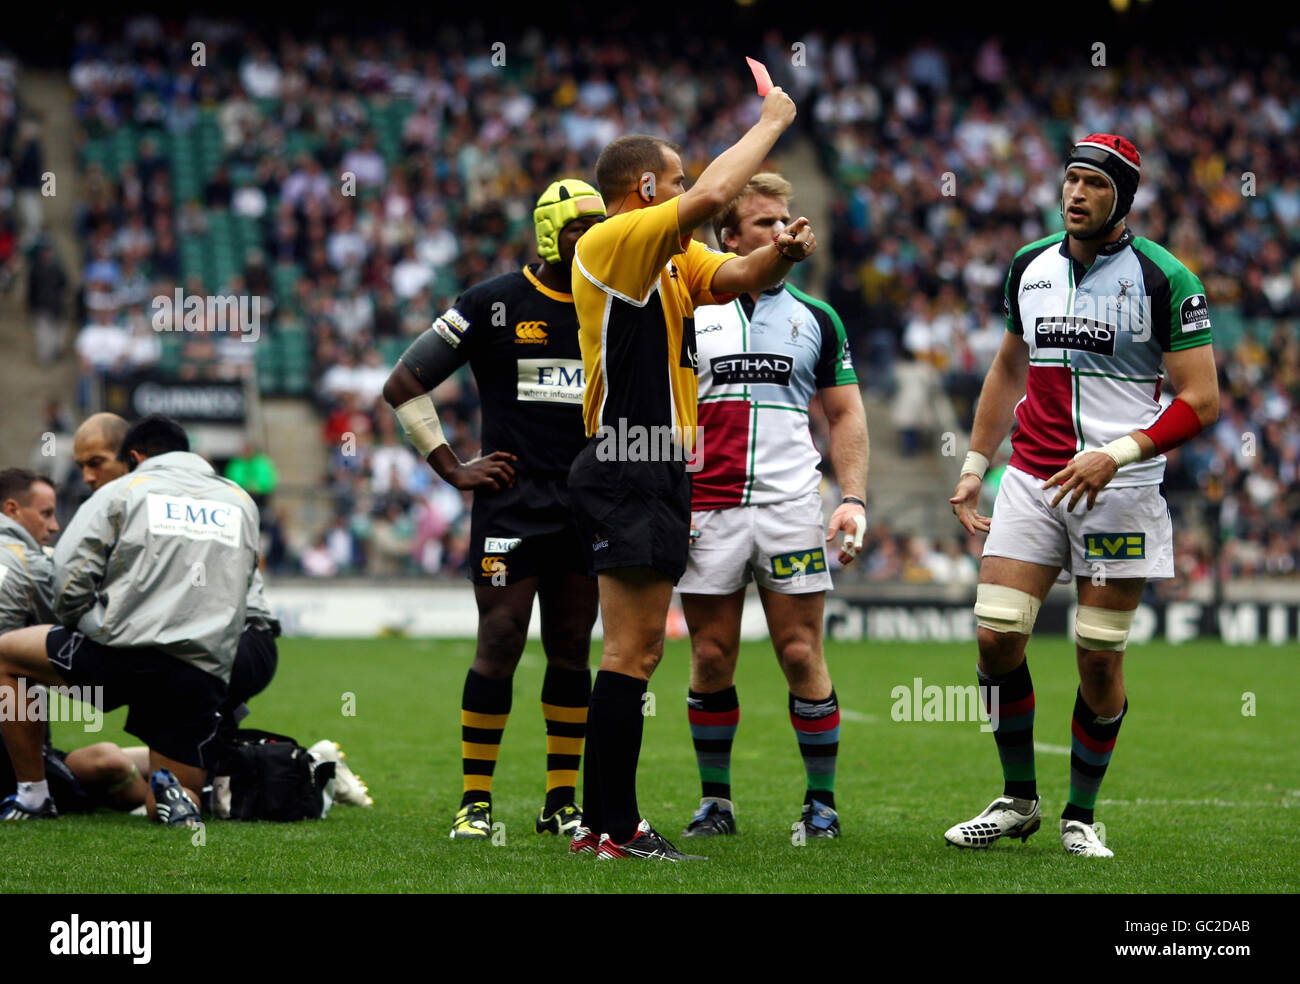 Rugby Union - Guinness Premiership - London Irish contro Gloucester Rugby -  Madejski Stadium. DaN Murphy, Londra irlandese Foto stock - Alamy